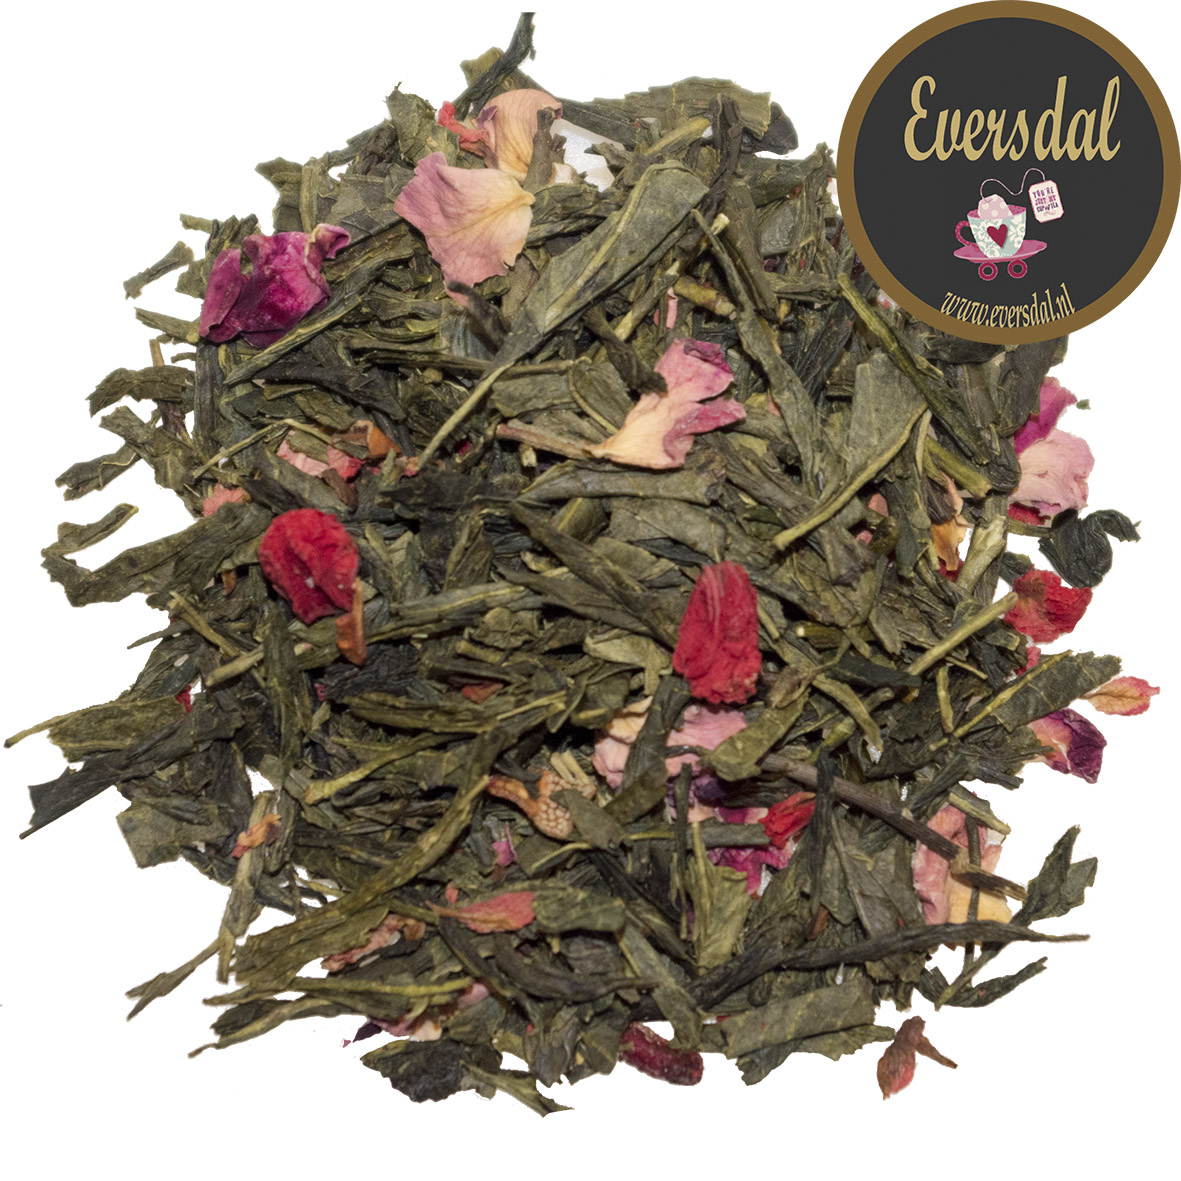 Granaatappeltje - groene thee met granaatappelpitten, rozenblad